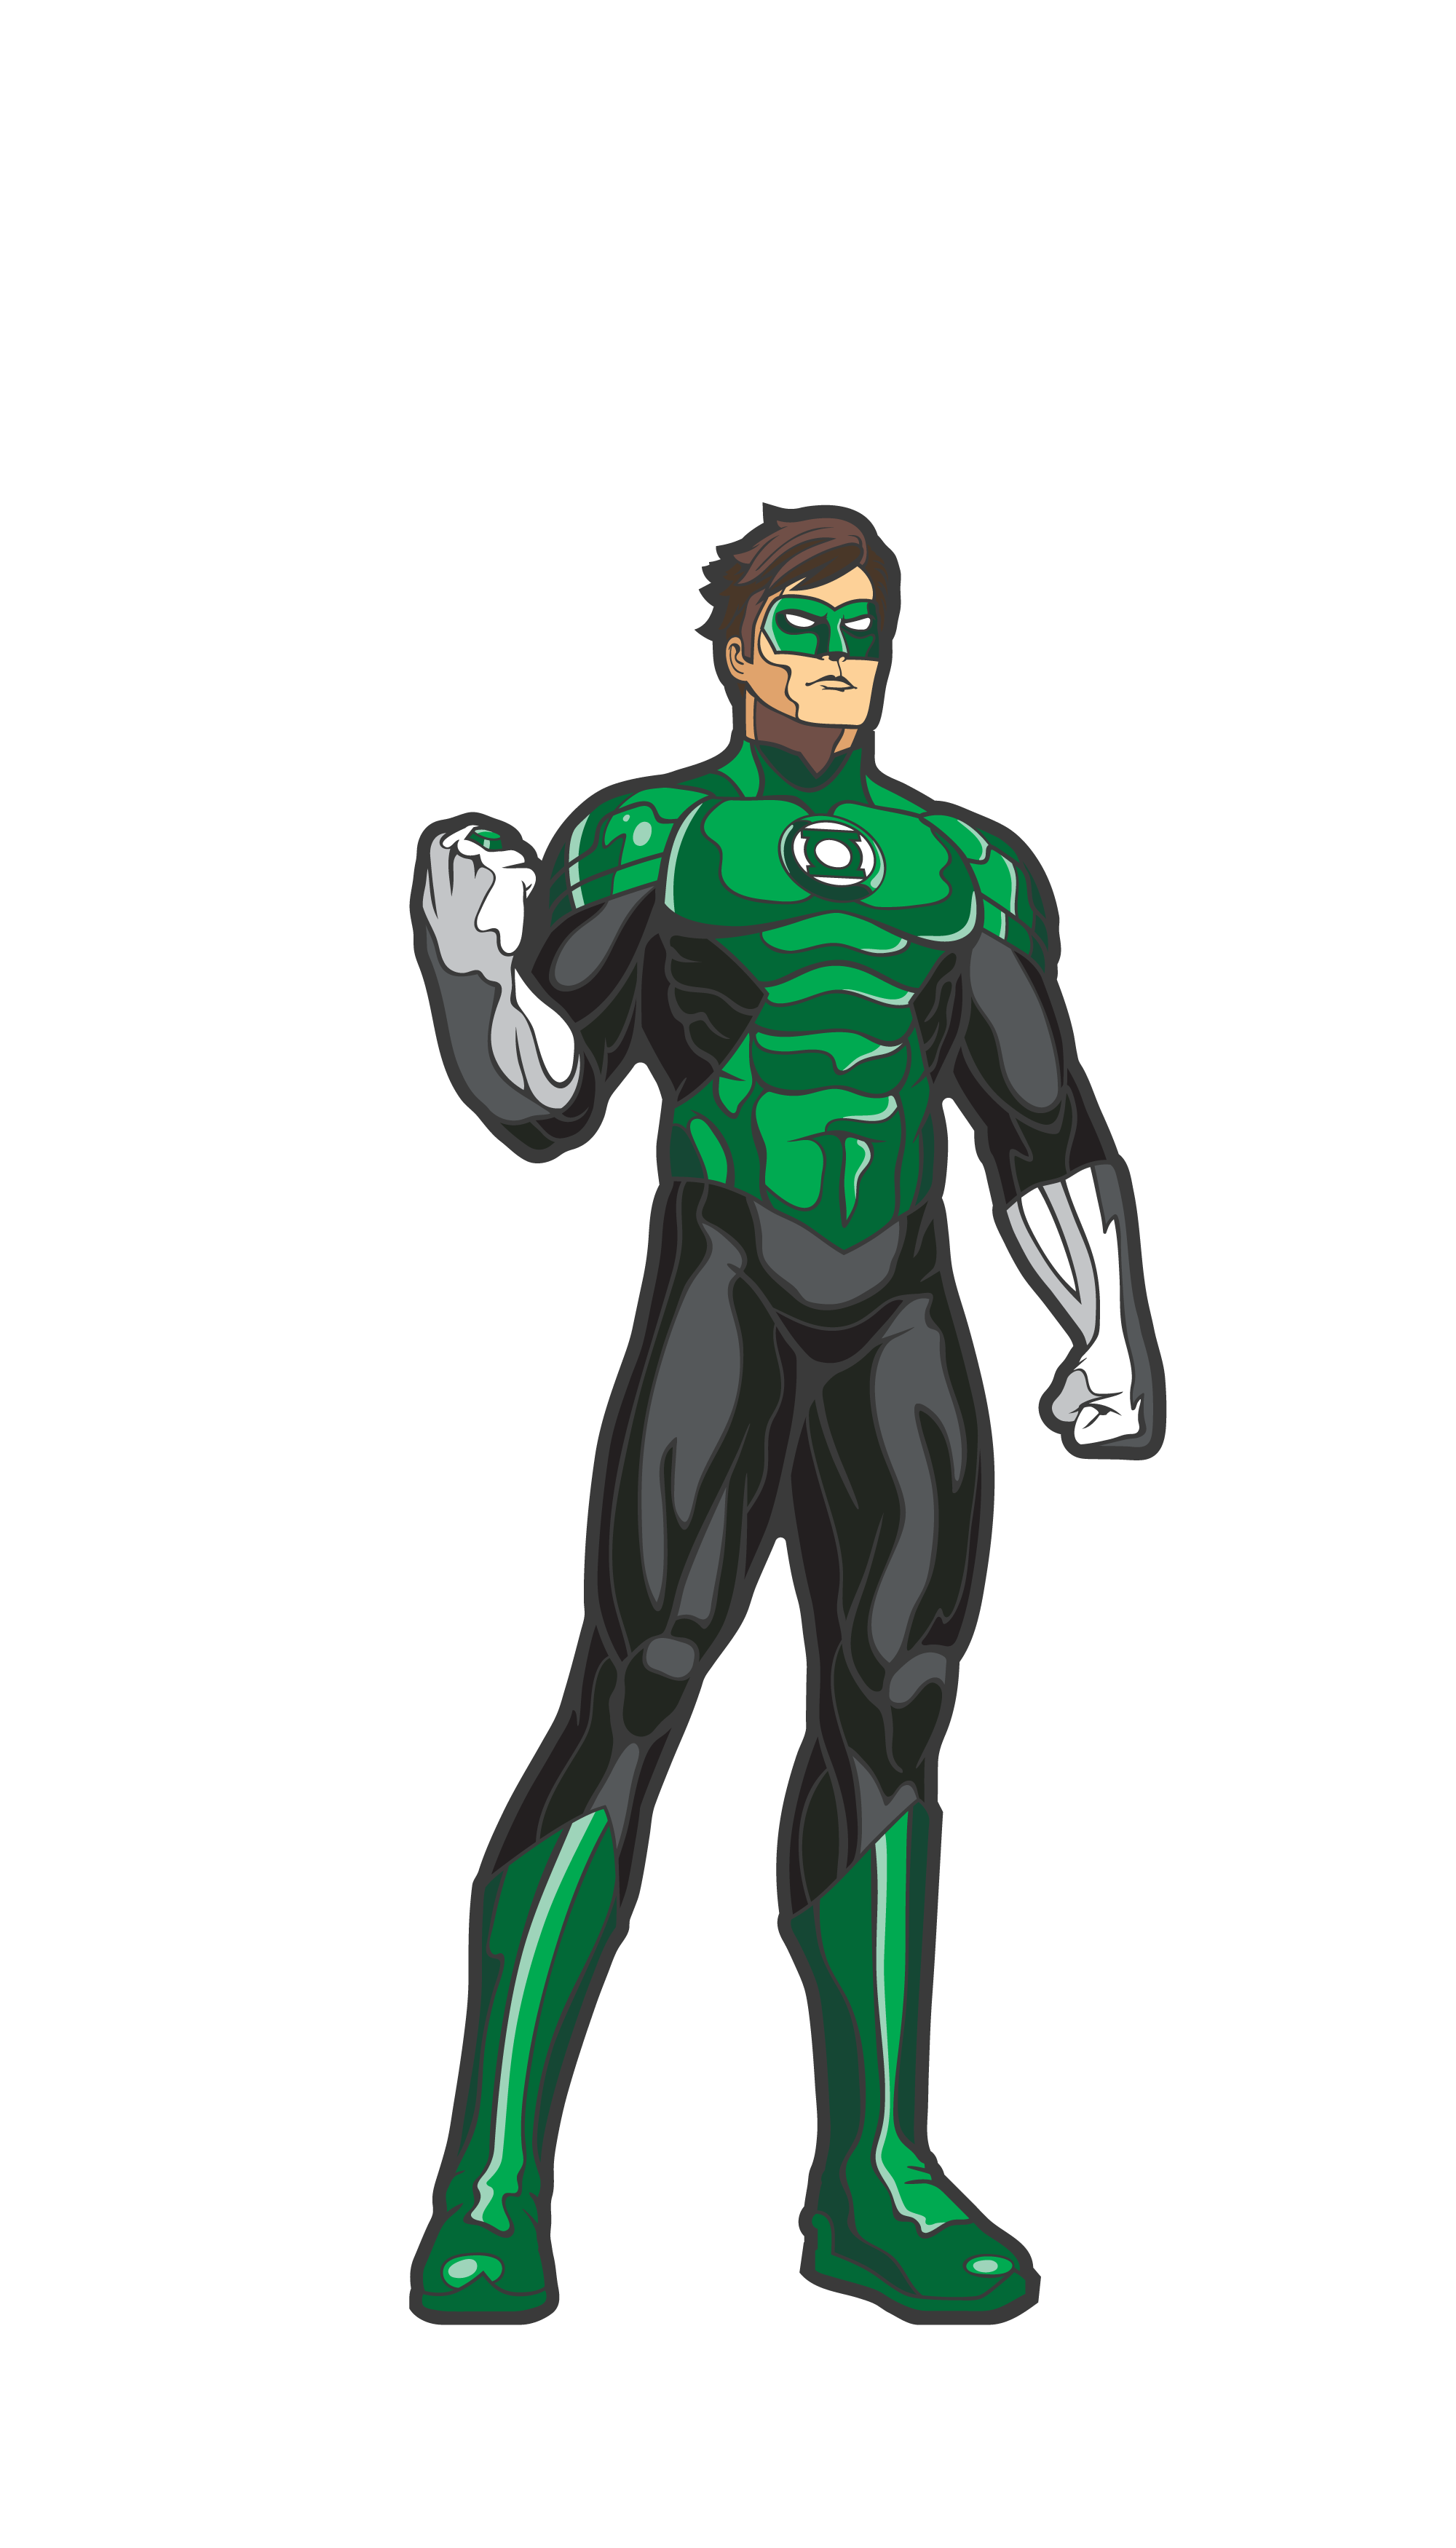 Green Lantern (48)